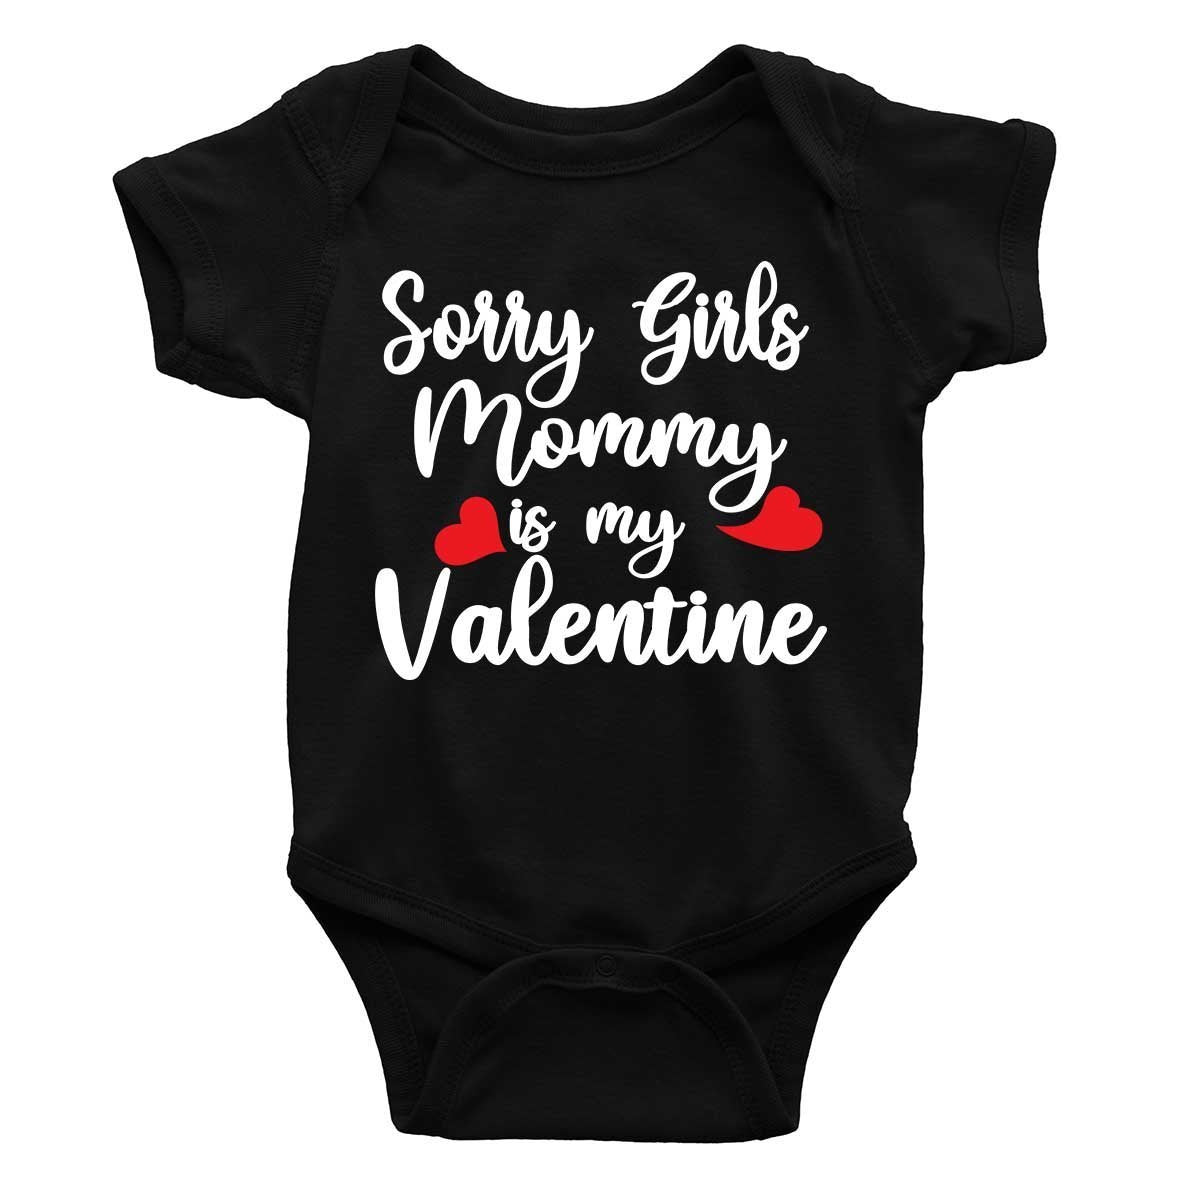 jopo sorry girls mommy is my valentine Black